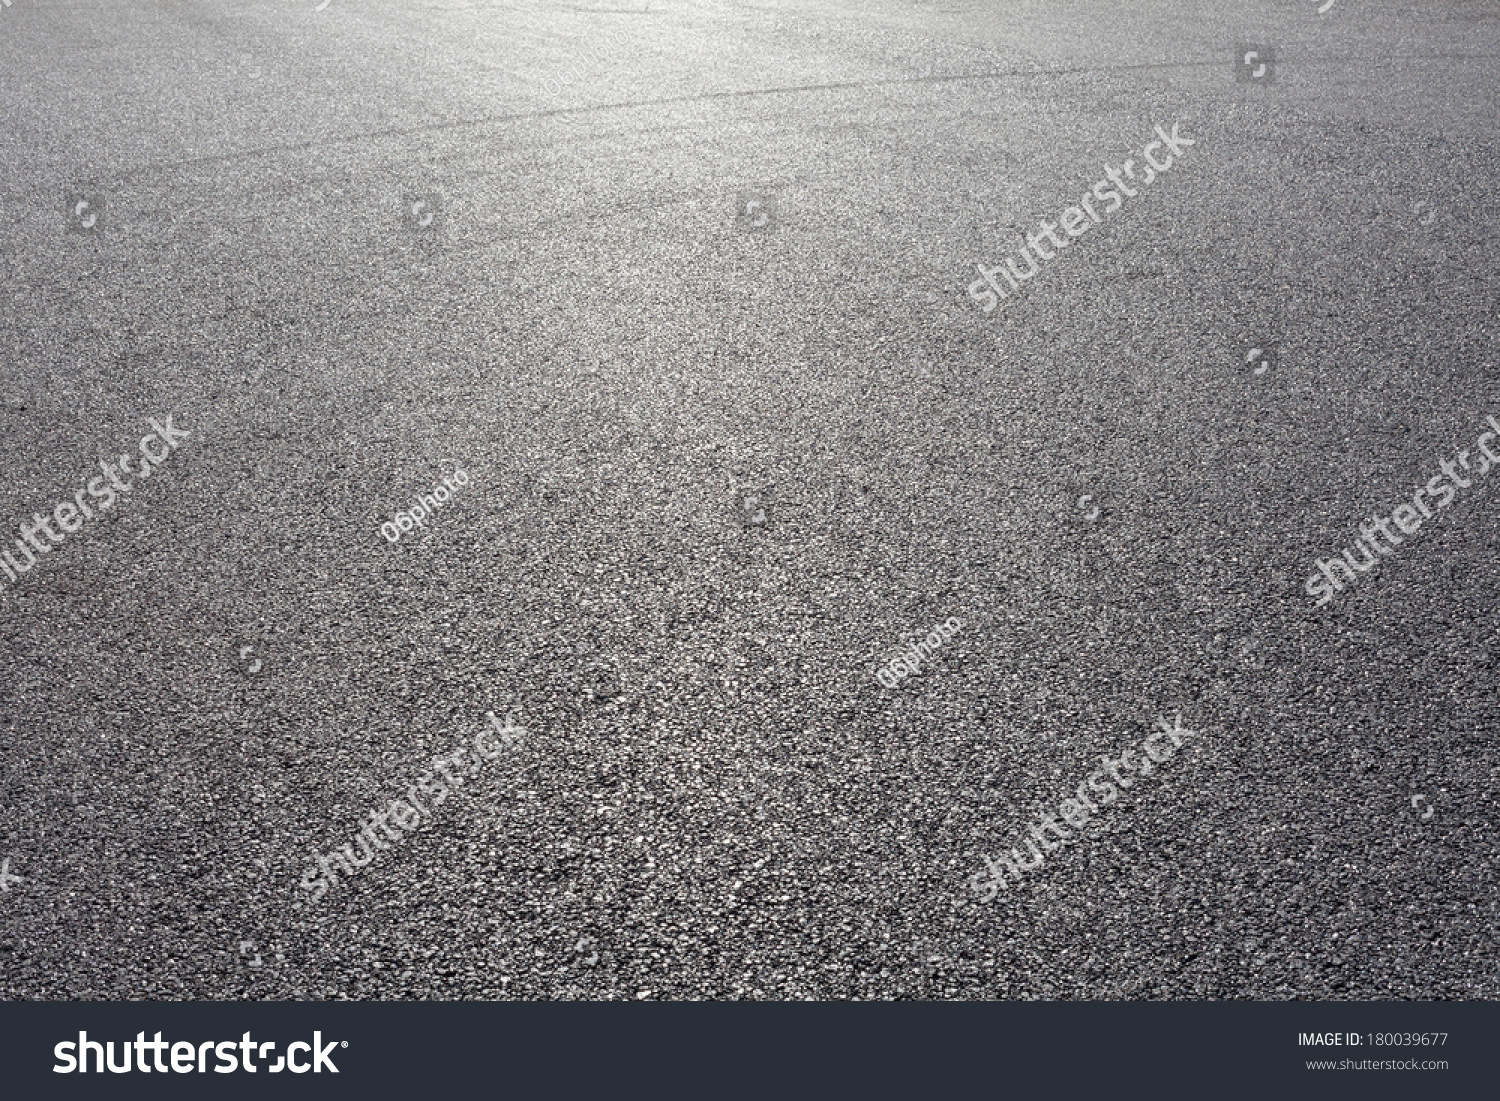 close-up horizontal view of new asphalt road #180039677